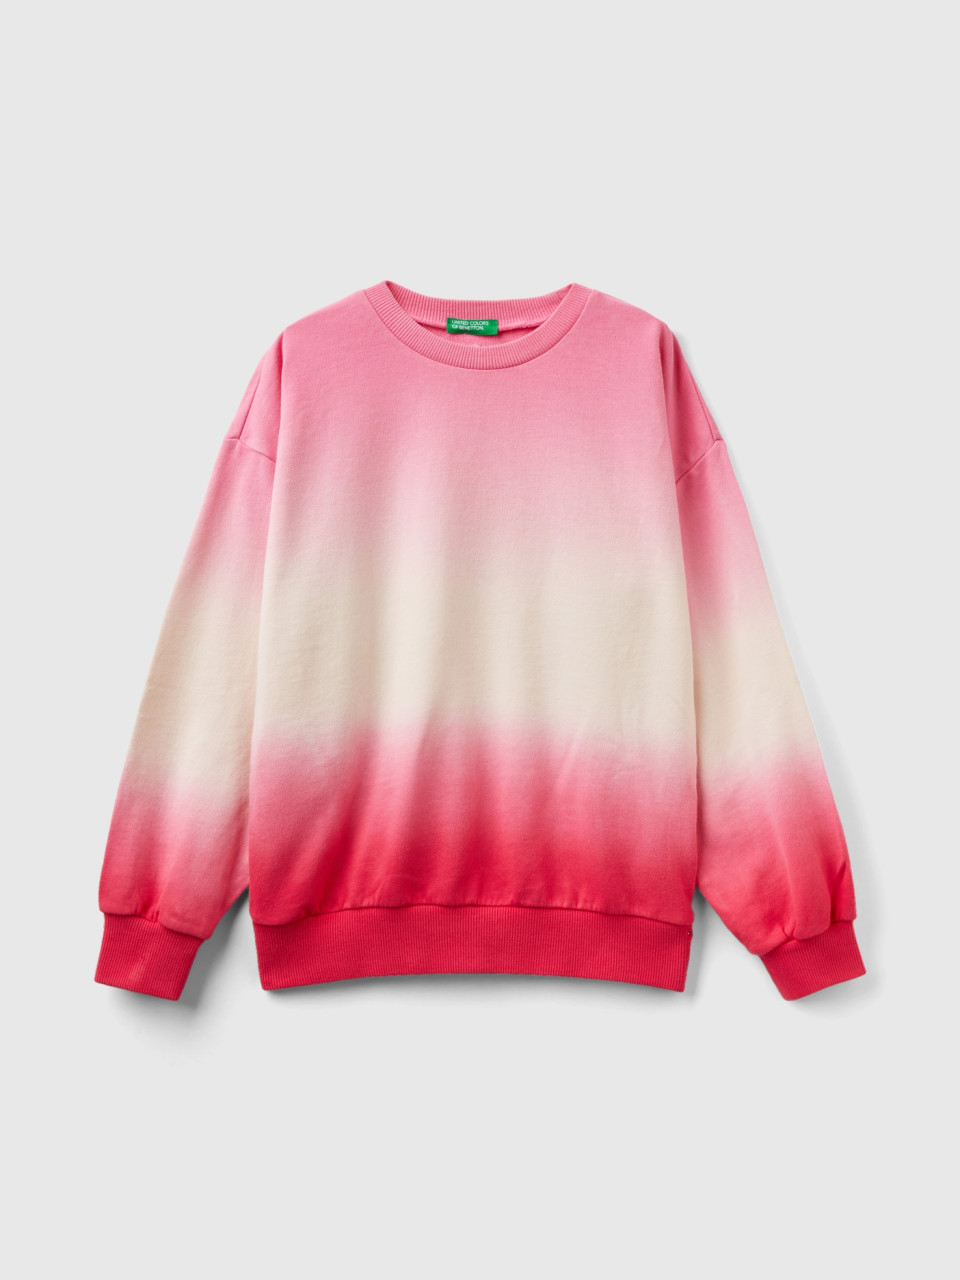 Benetton, 100% Cotton Crew Neck Sweater, Pink, Kids